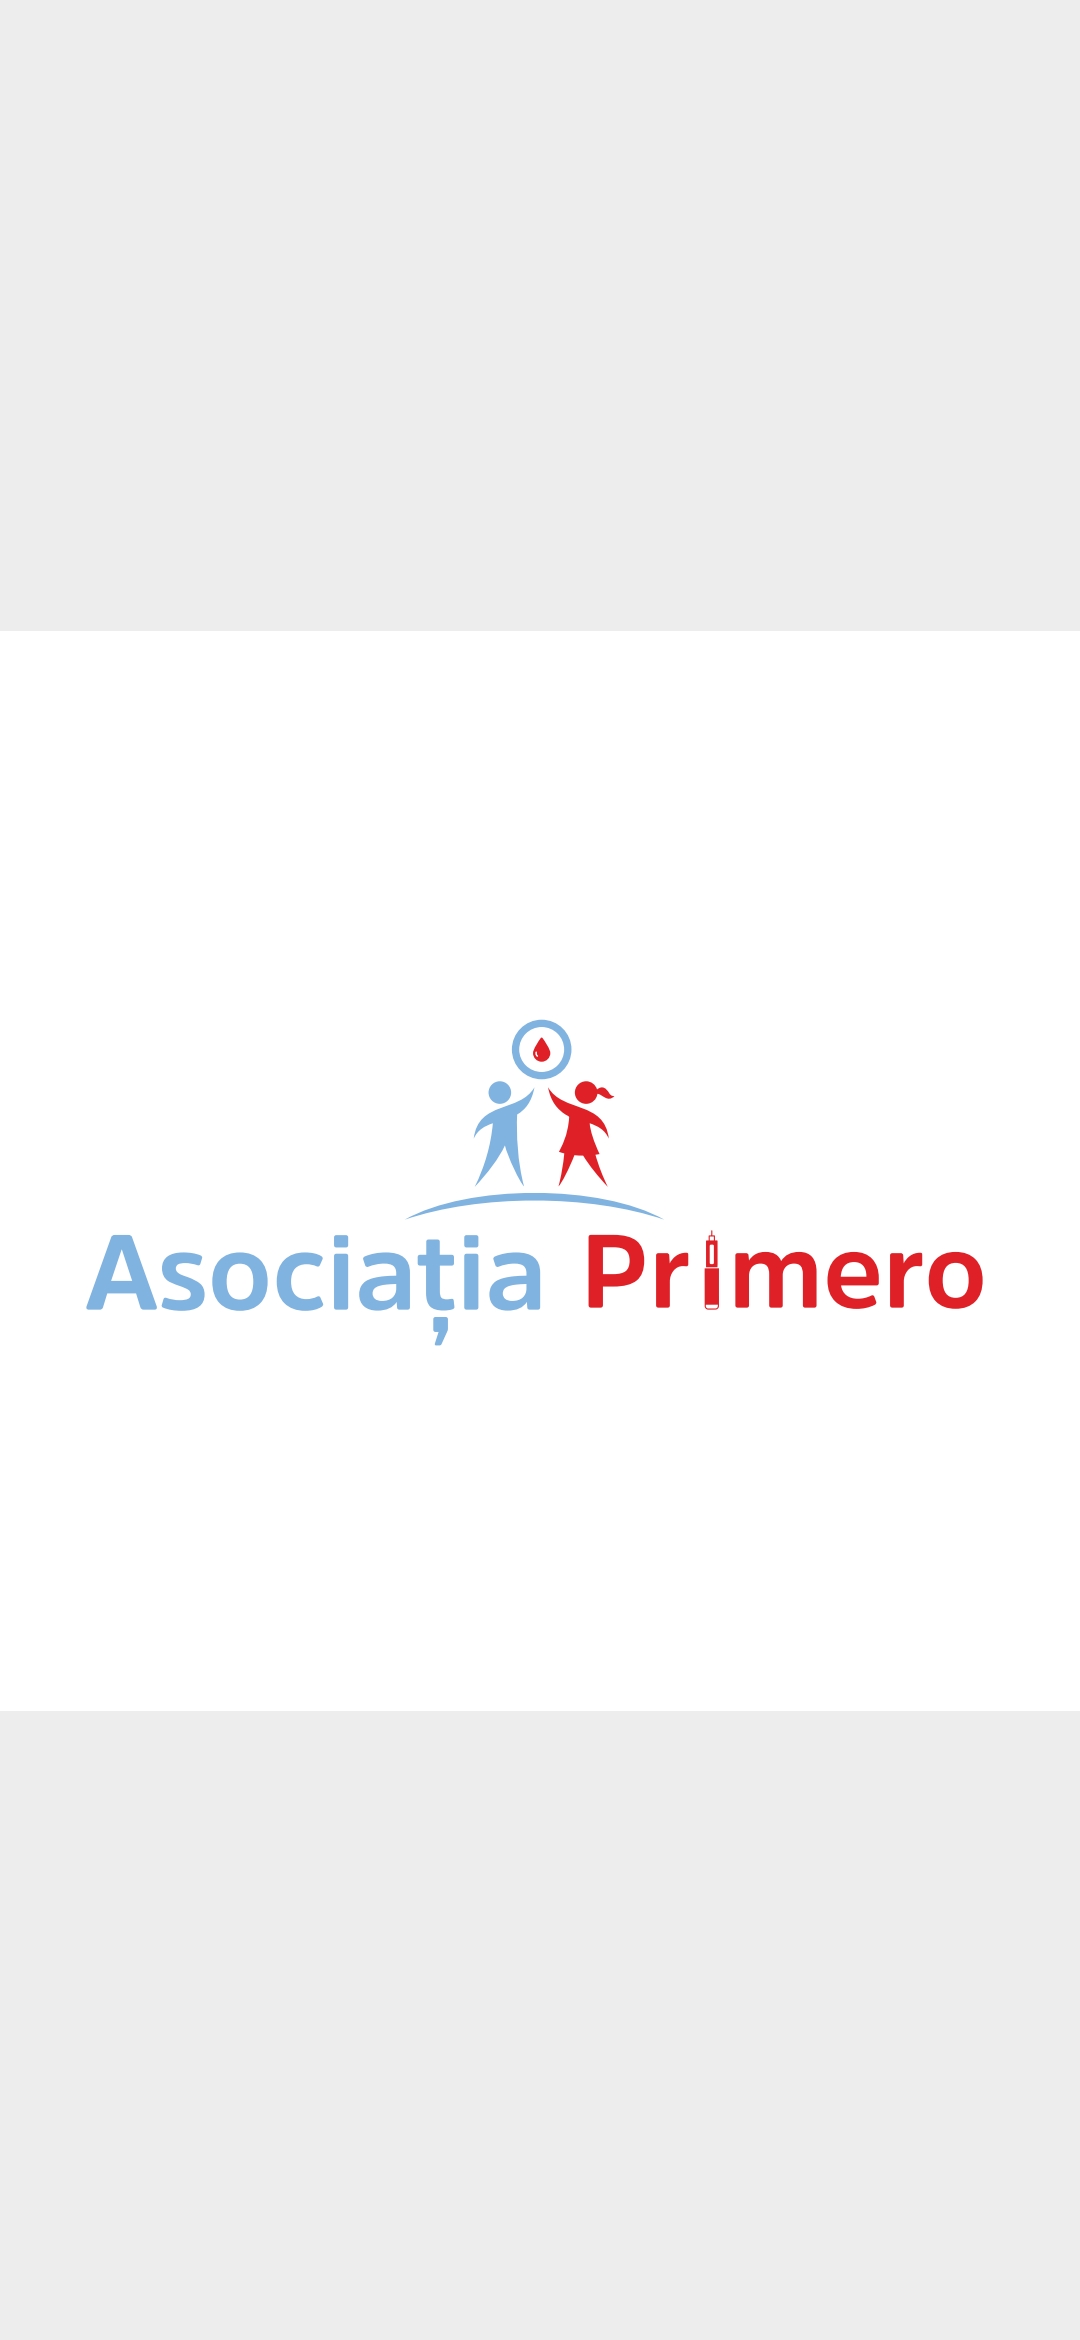 Asociatia Primero  logo